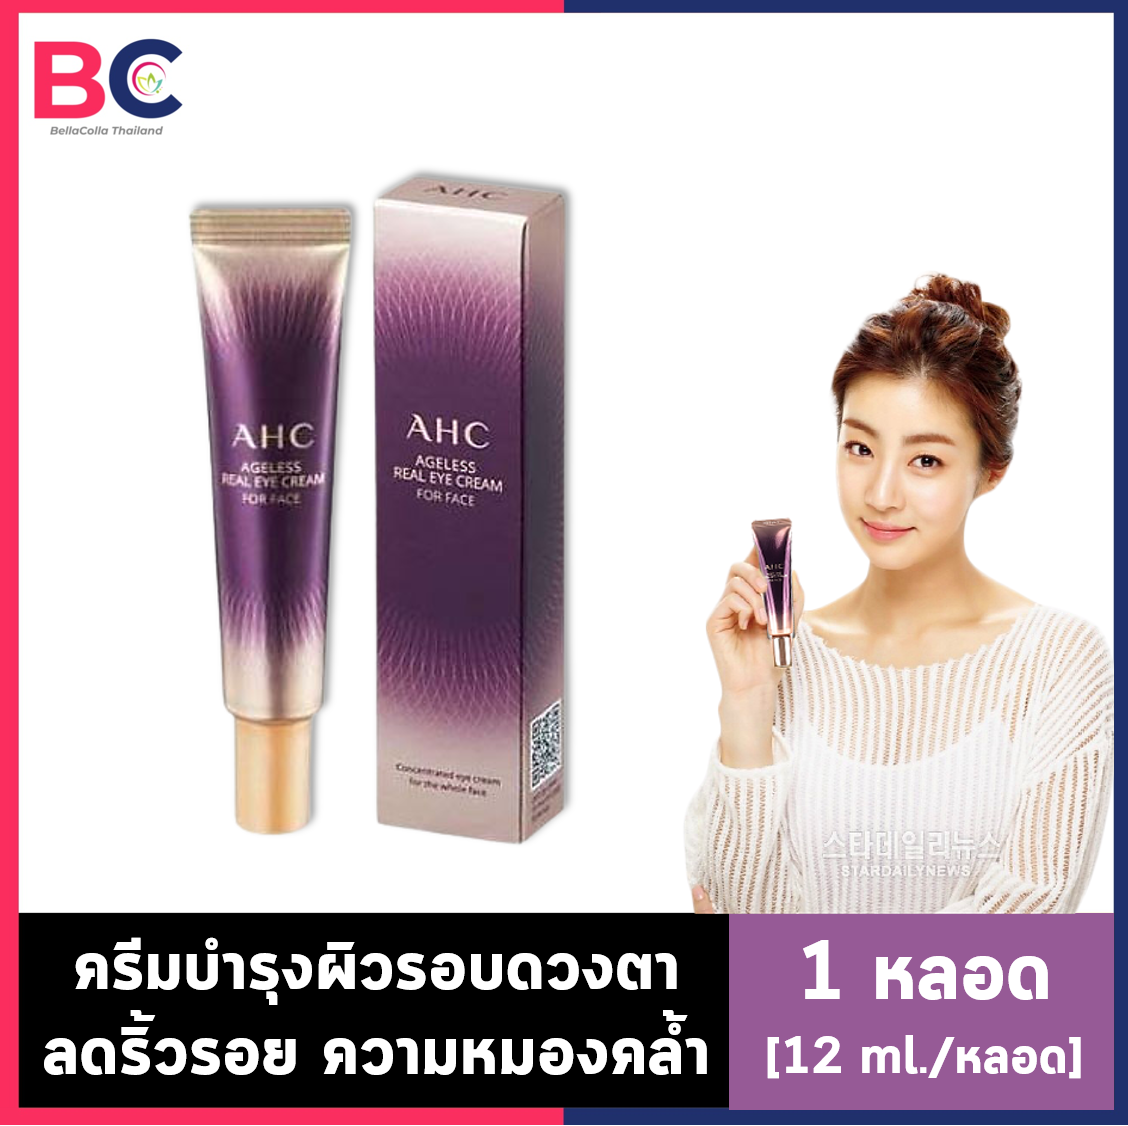 AHC Ageless Real Eye Cream For Face [12 ml./หลอด]  อายครีมAHC ครีมบำรุงรอบดวงตาจากเกาหลี BC ความงาม